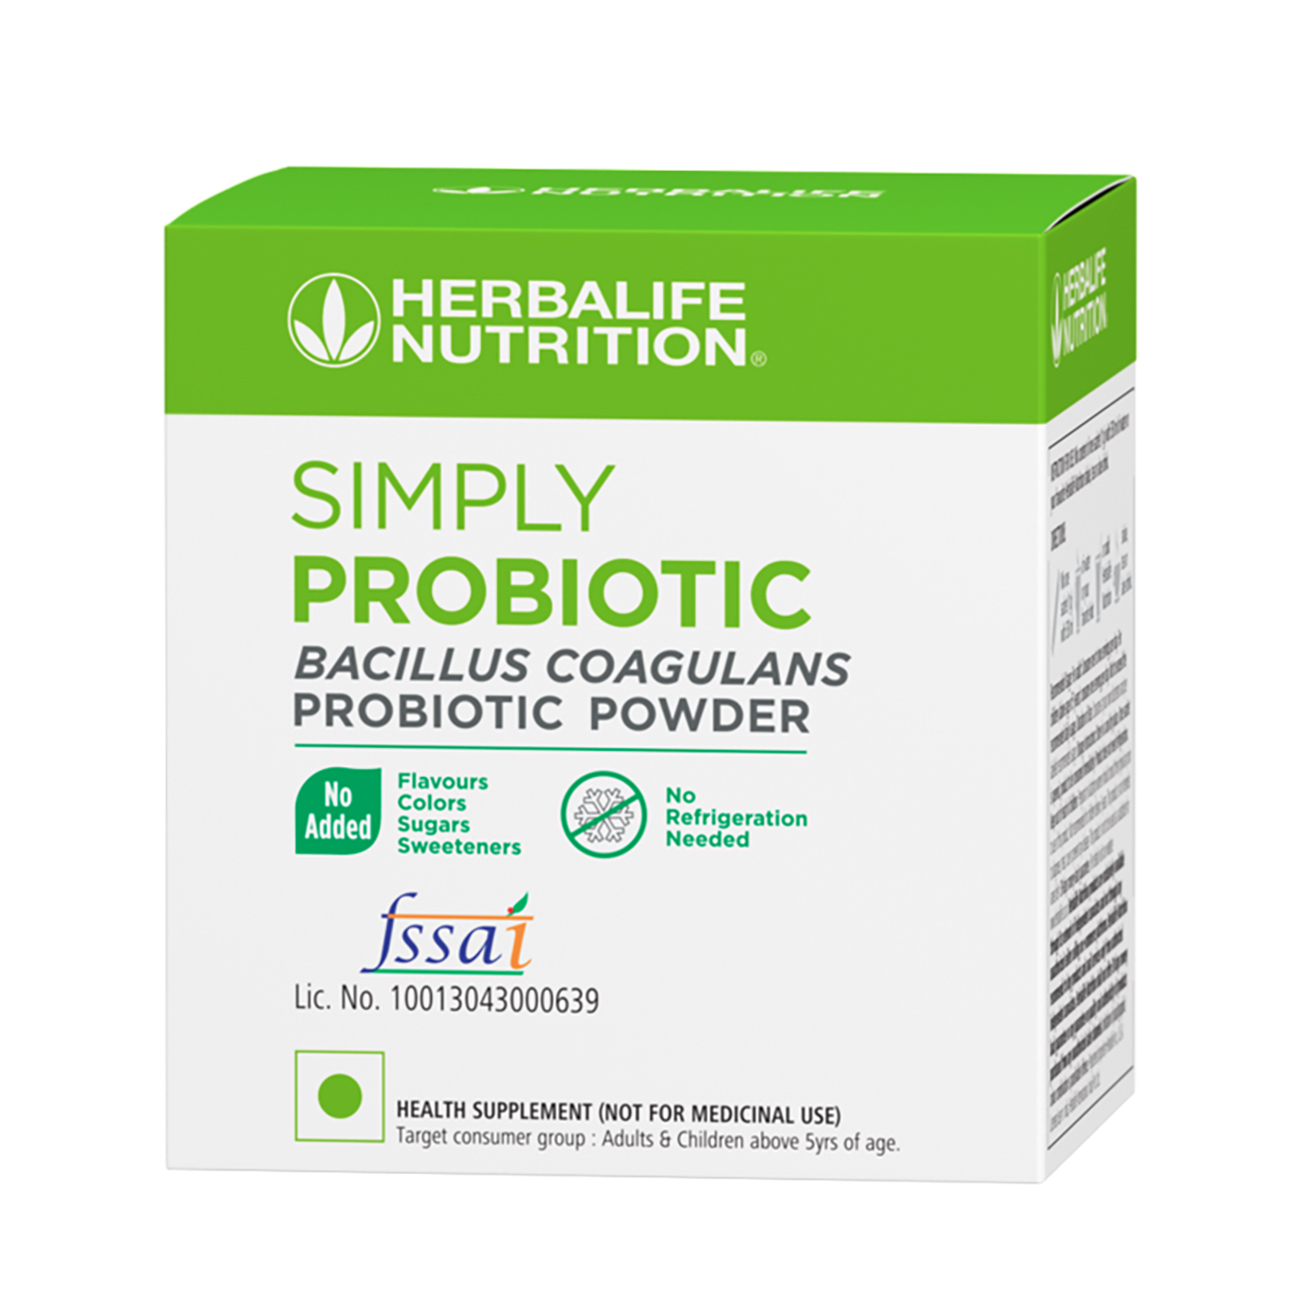 Simply Probiotic